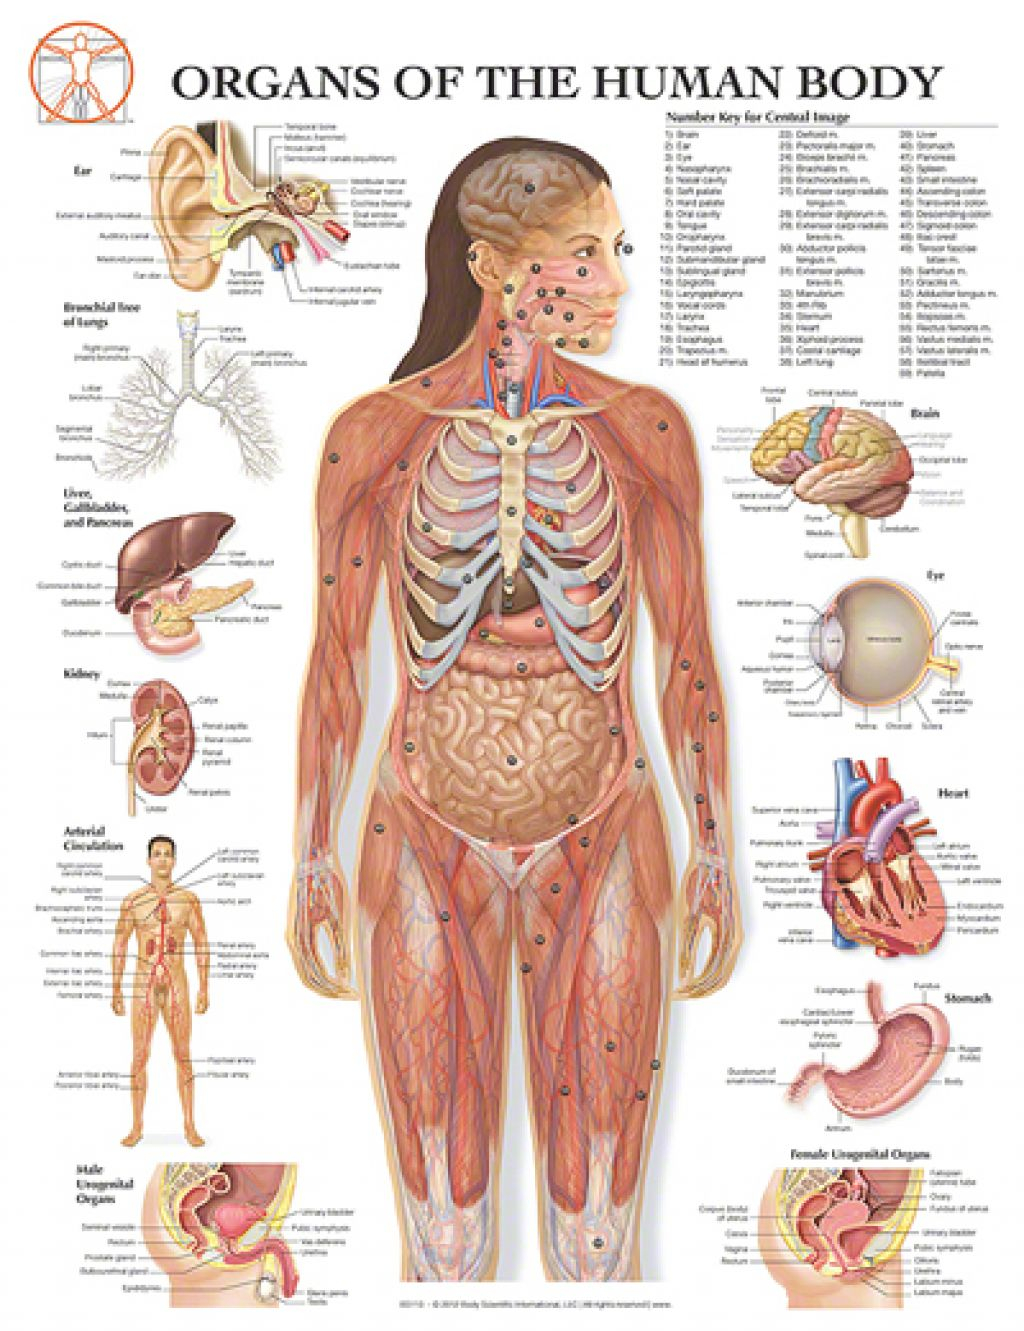 Human Organs Diagram Free Human Body Organs Download Free Clip Art Free Clip Art On